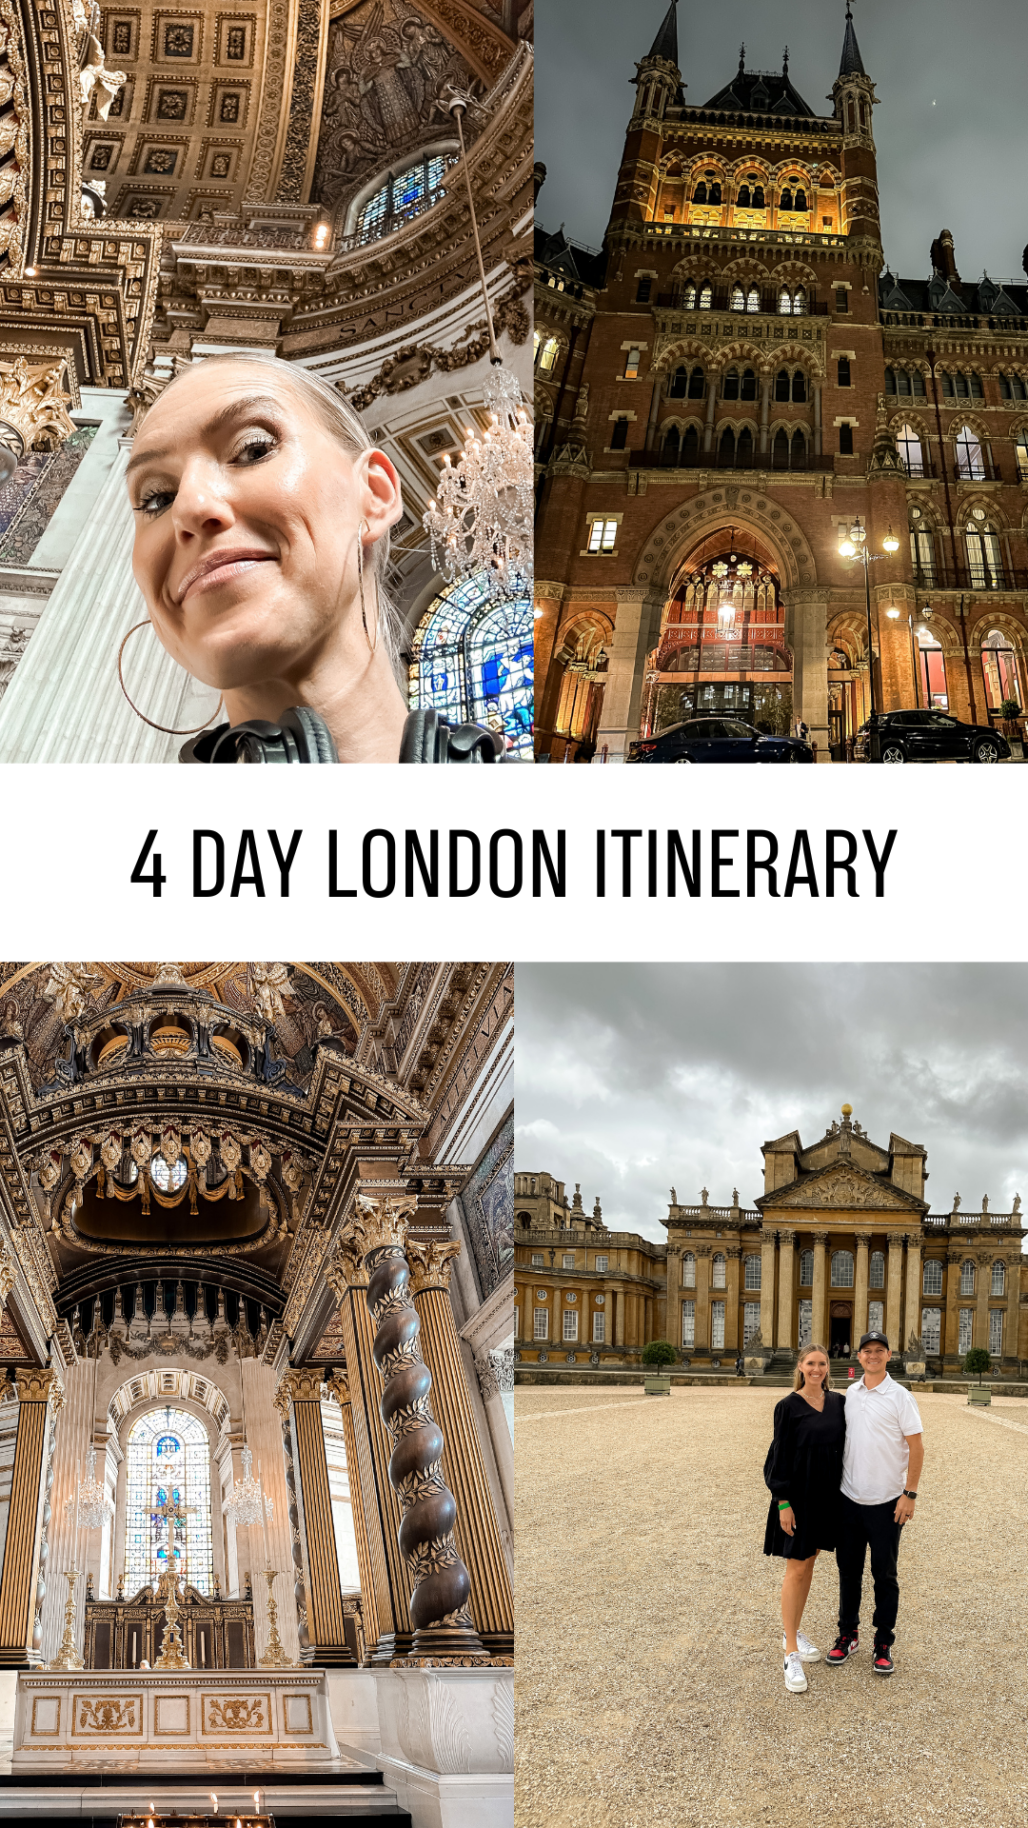 4 day London itinerary